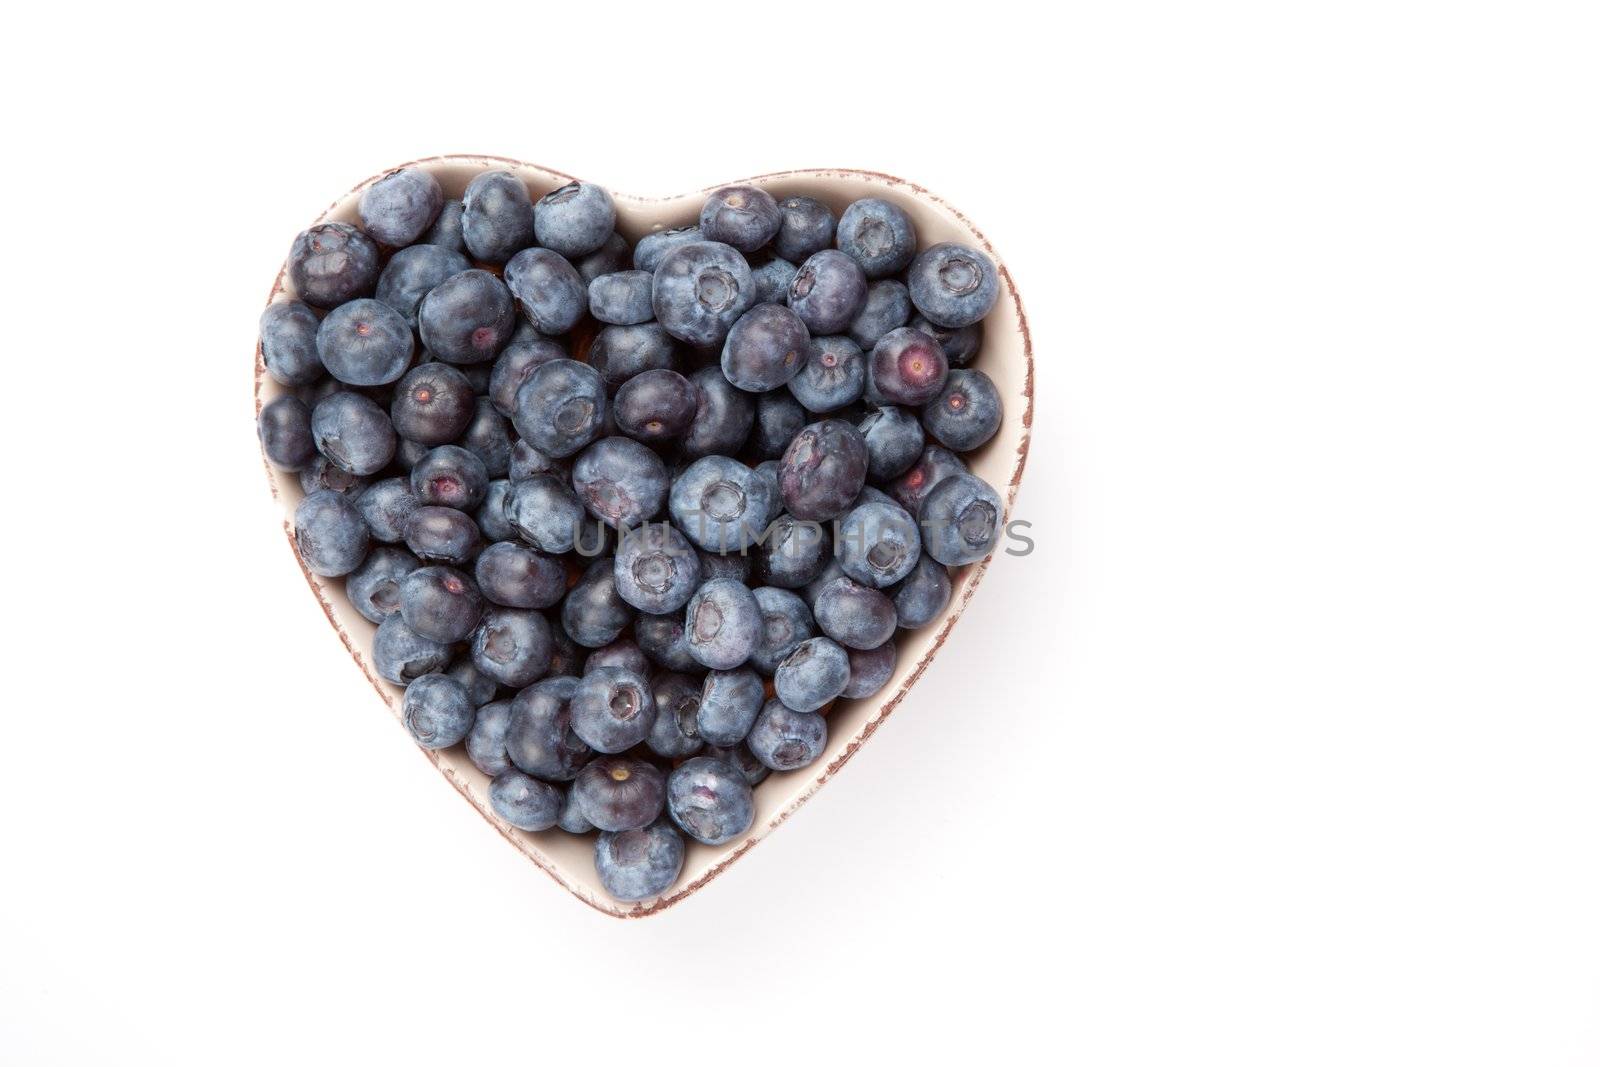 Blueberries in a heart shaped bowl by Wavebreakmedia